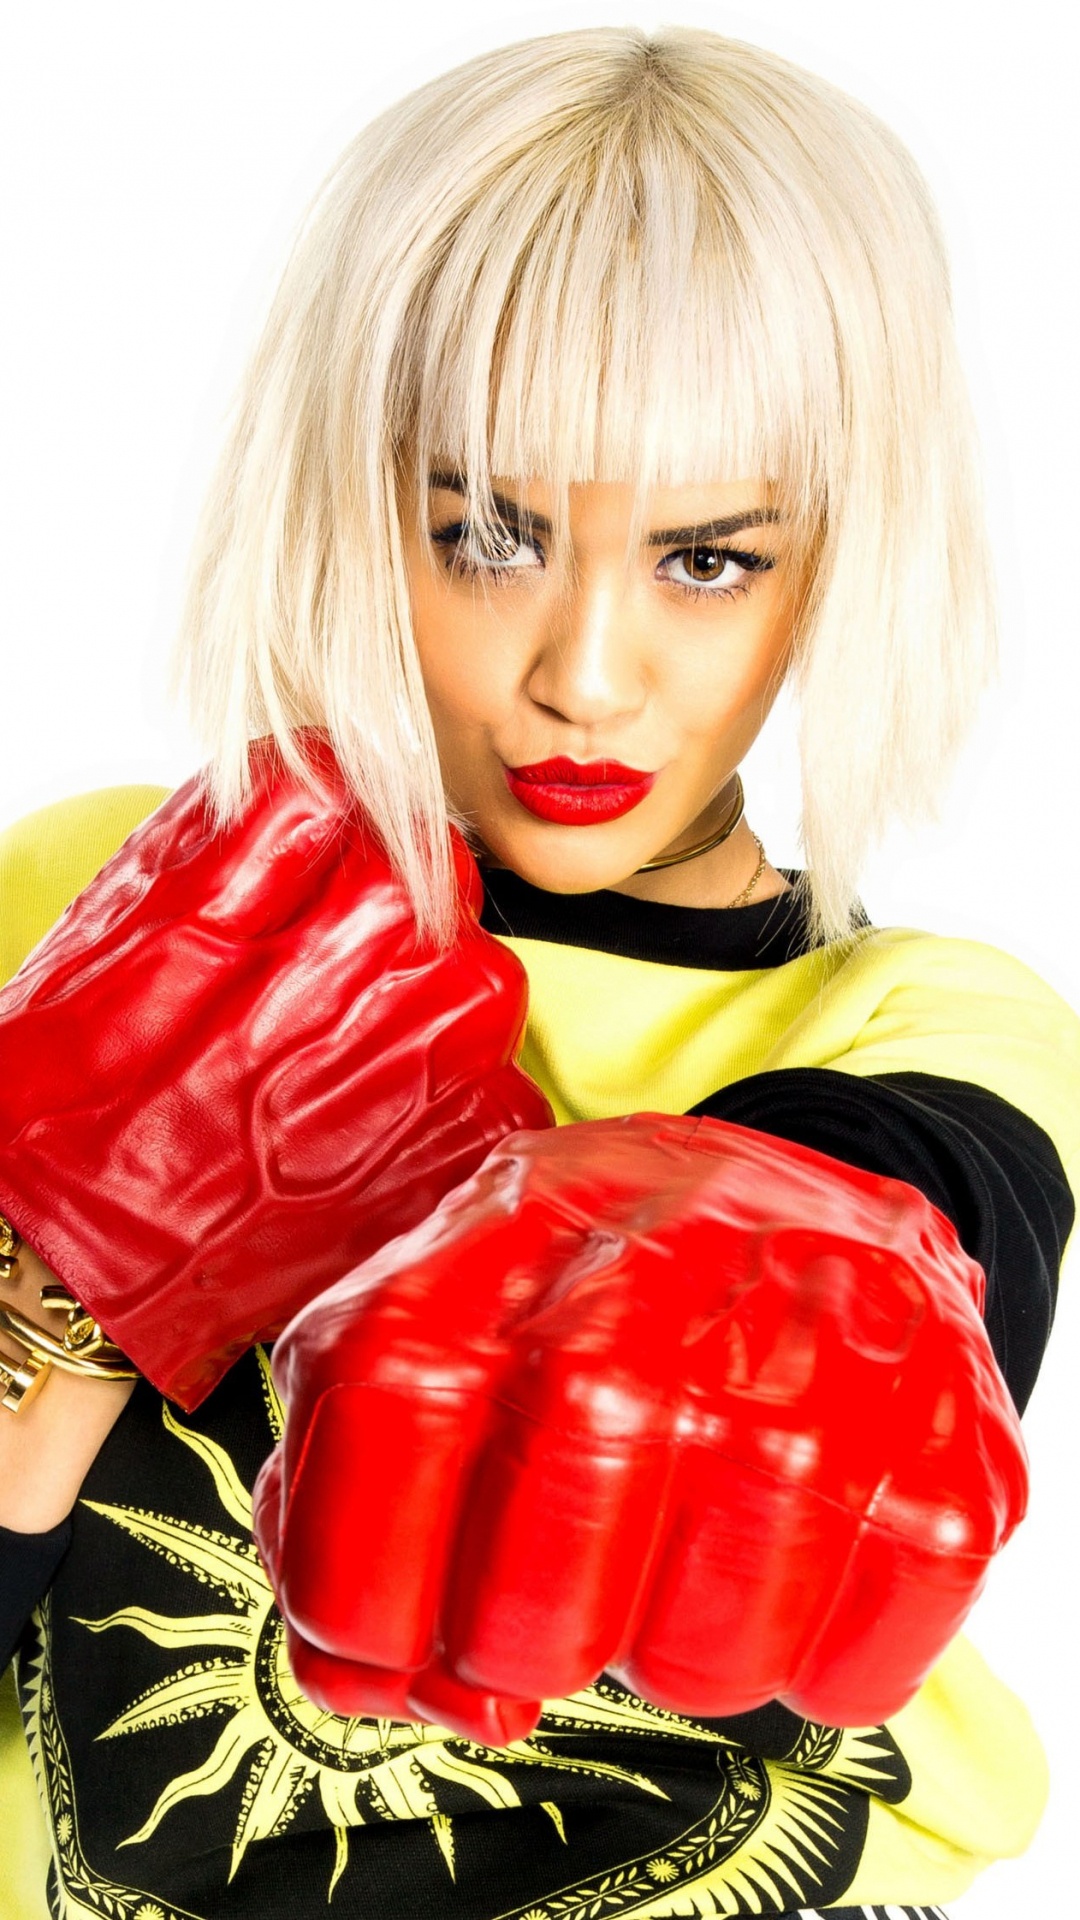 Glove, Rita Ora, Boxing Glove, Red, Boxing Equipment. Wallpaper in 1080x1920 Resolution